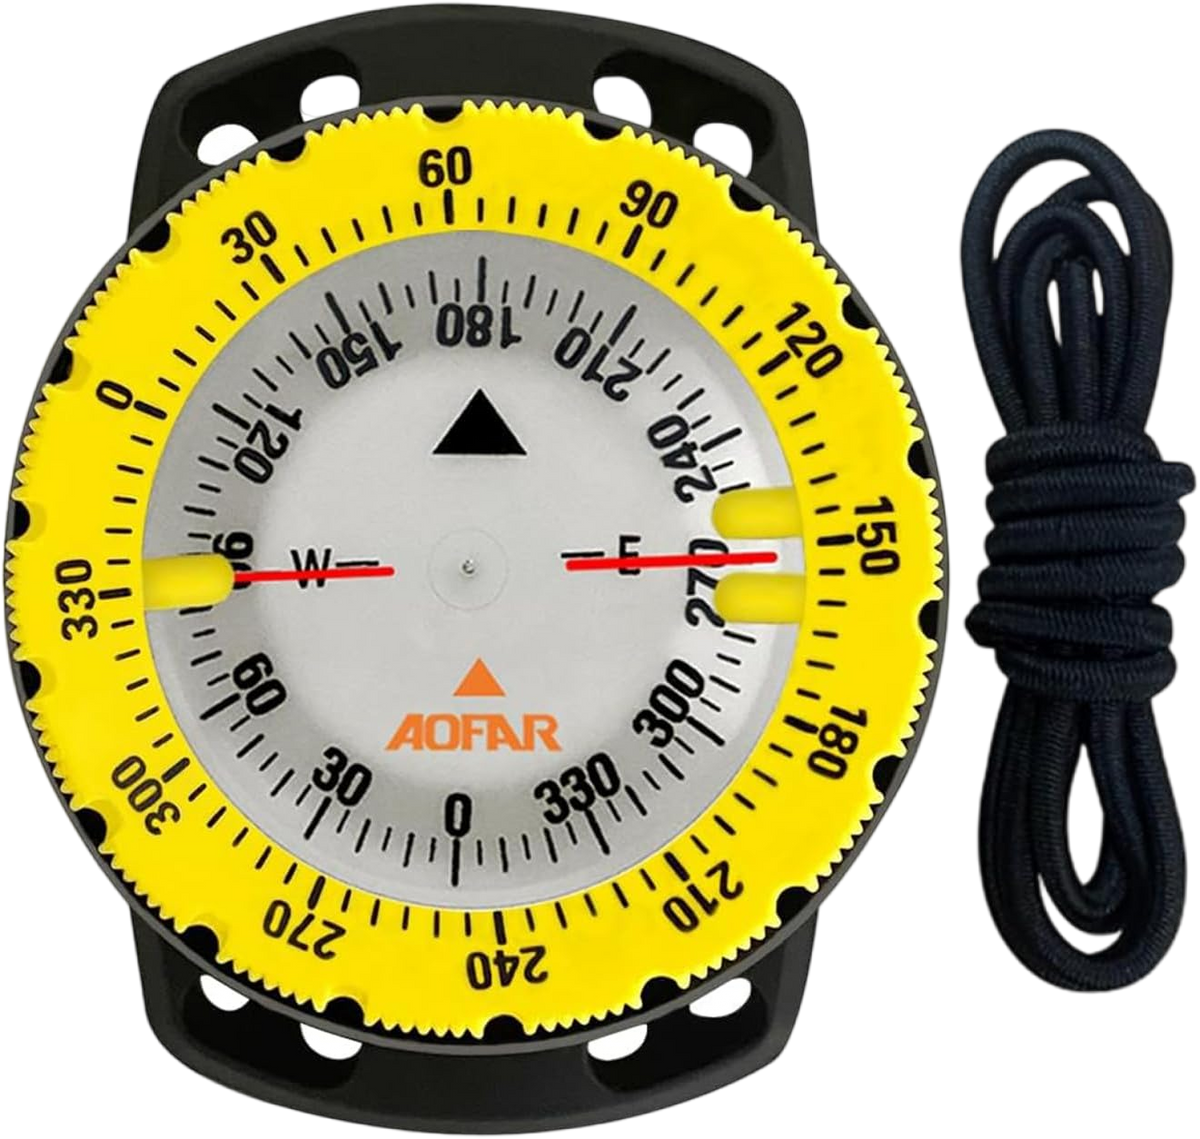 AF-Q60B Dive Wrist Compass